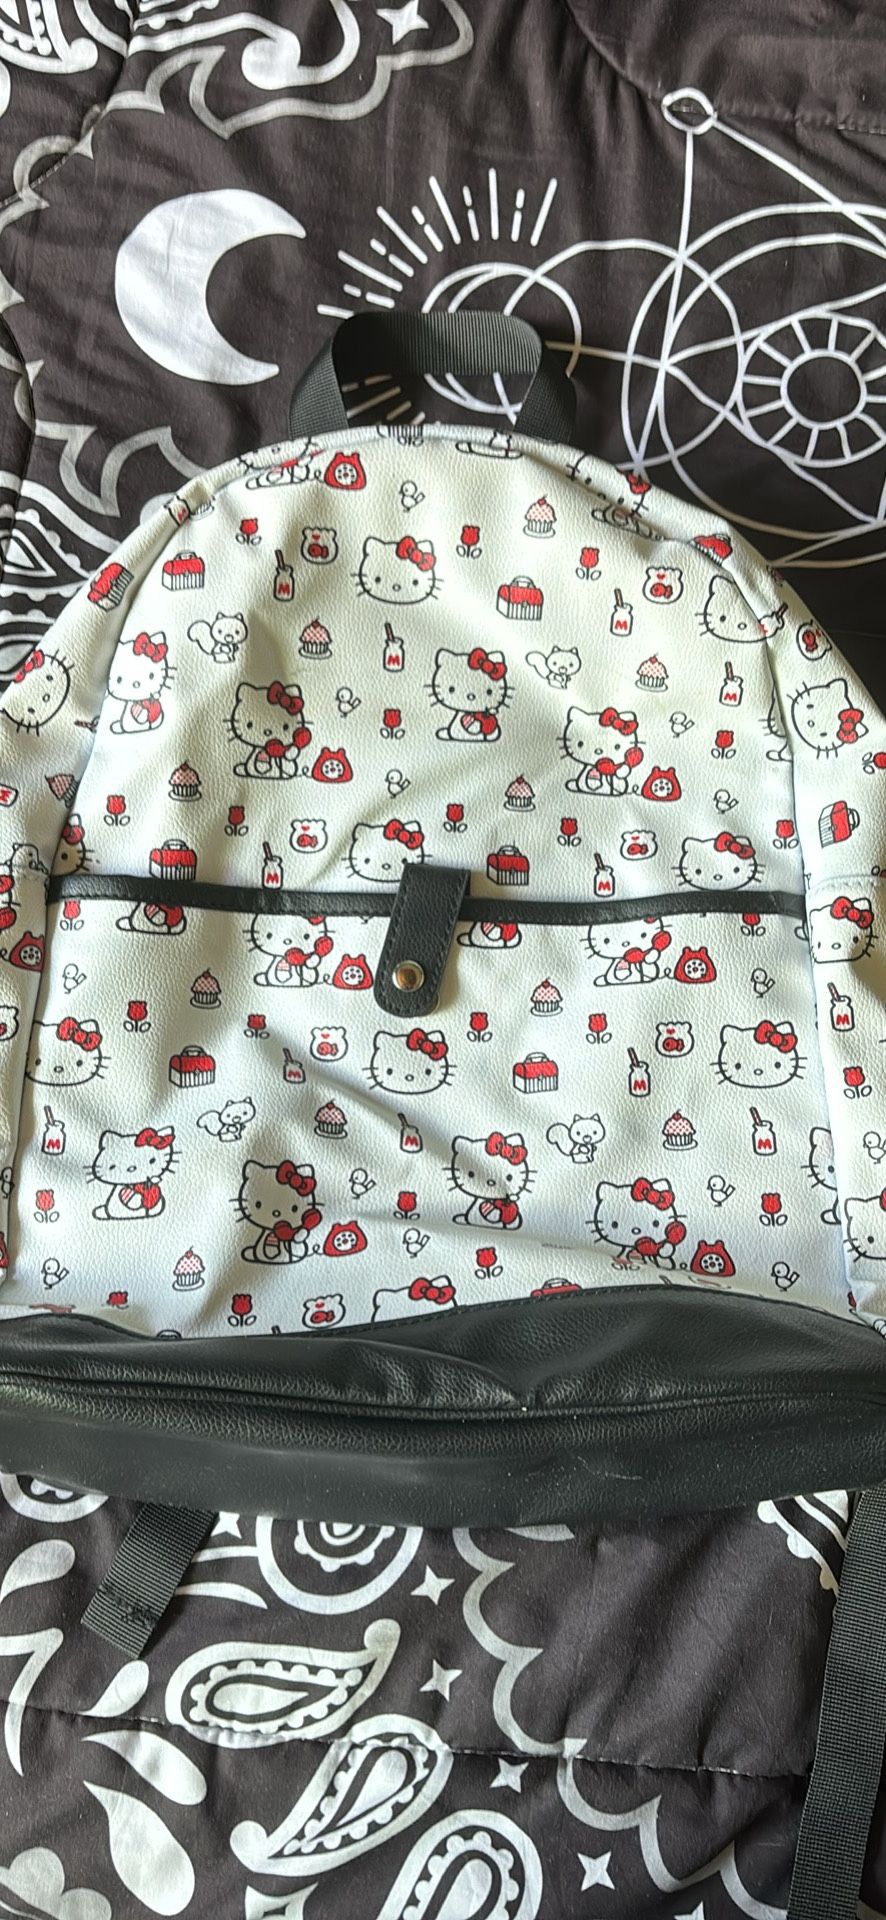 Hello Kitty Book Bag (hardly Used)